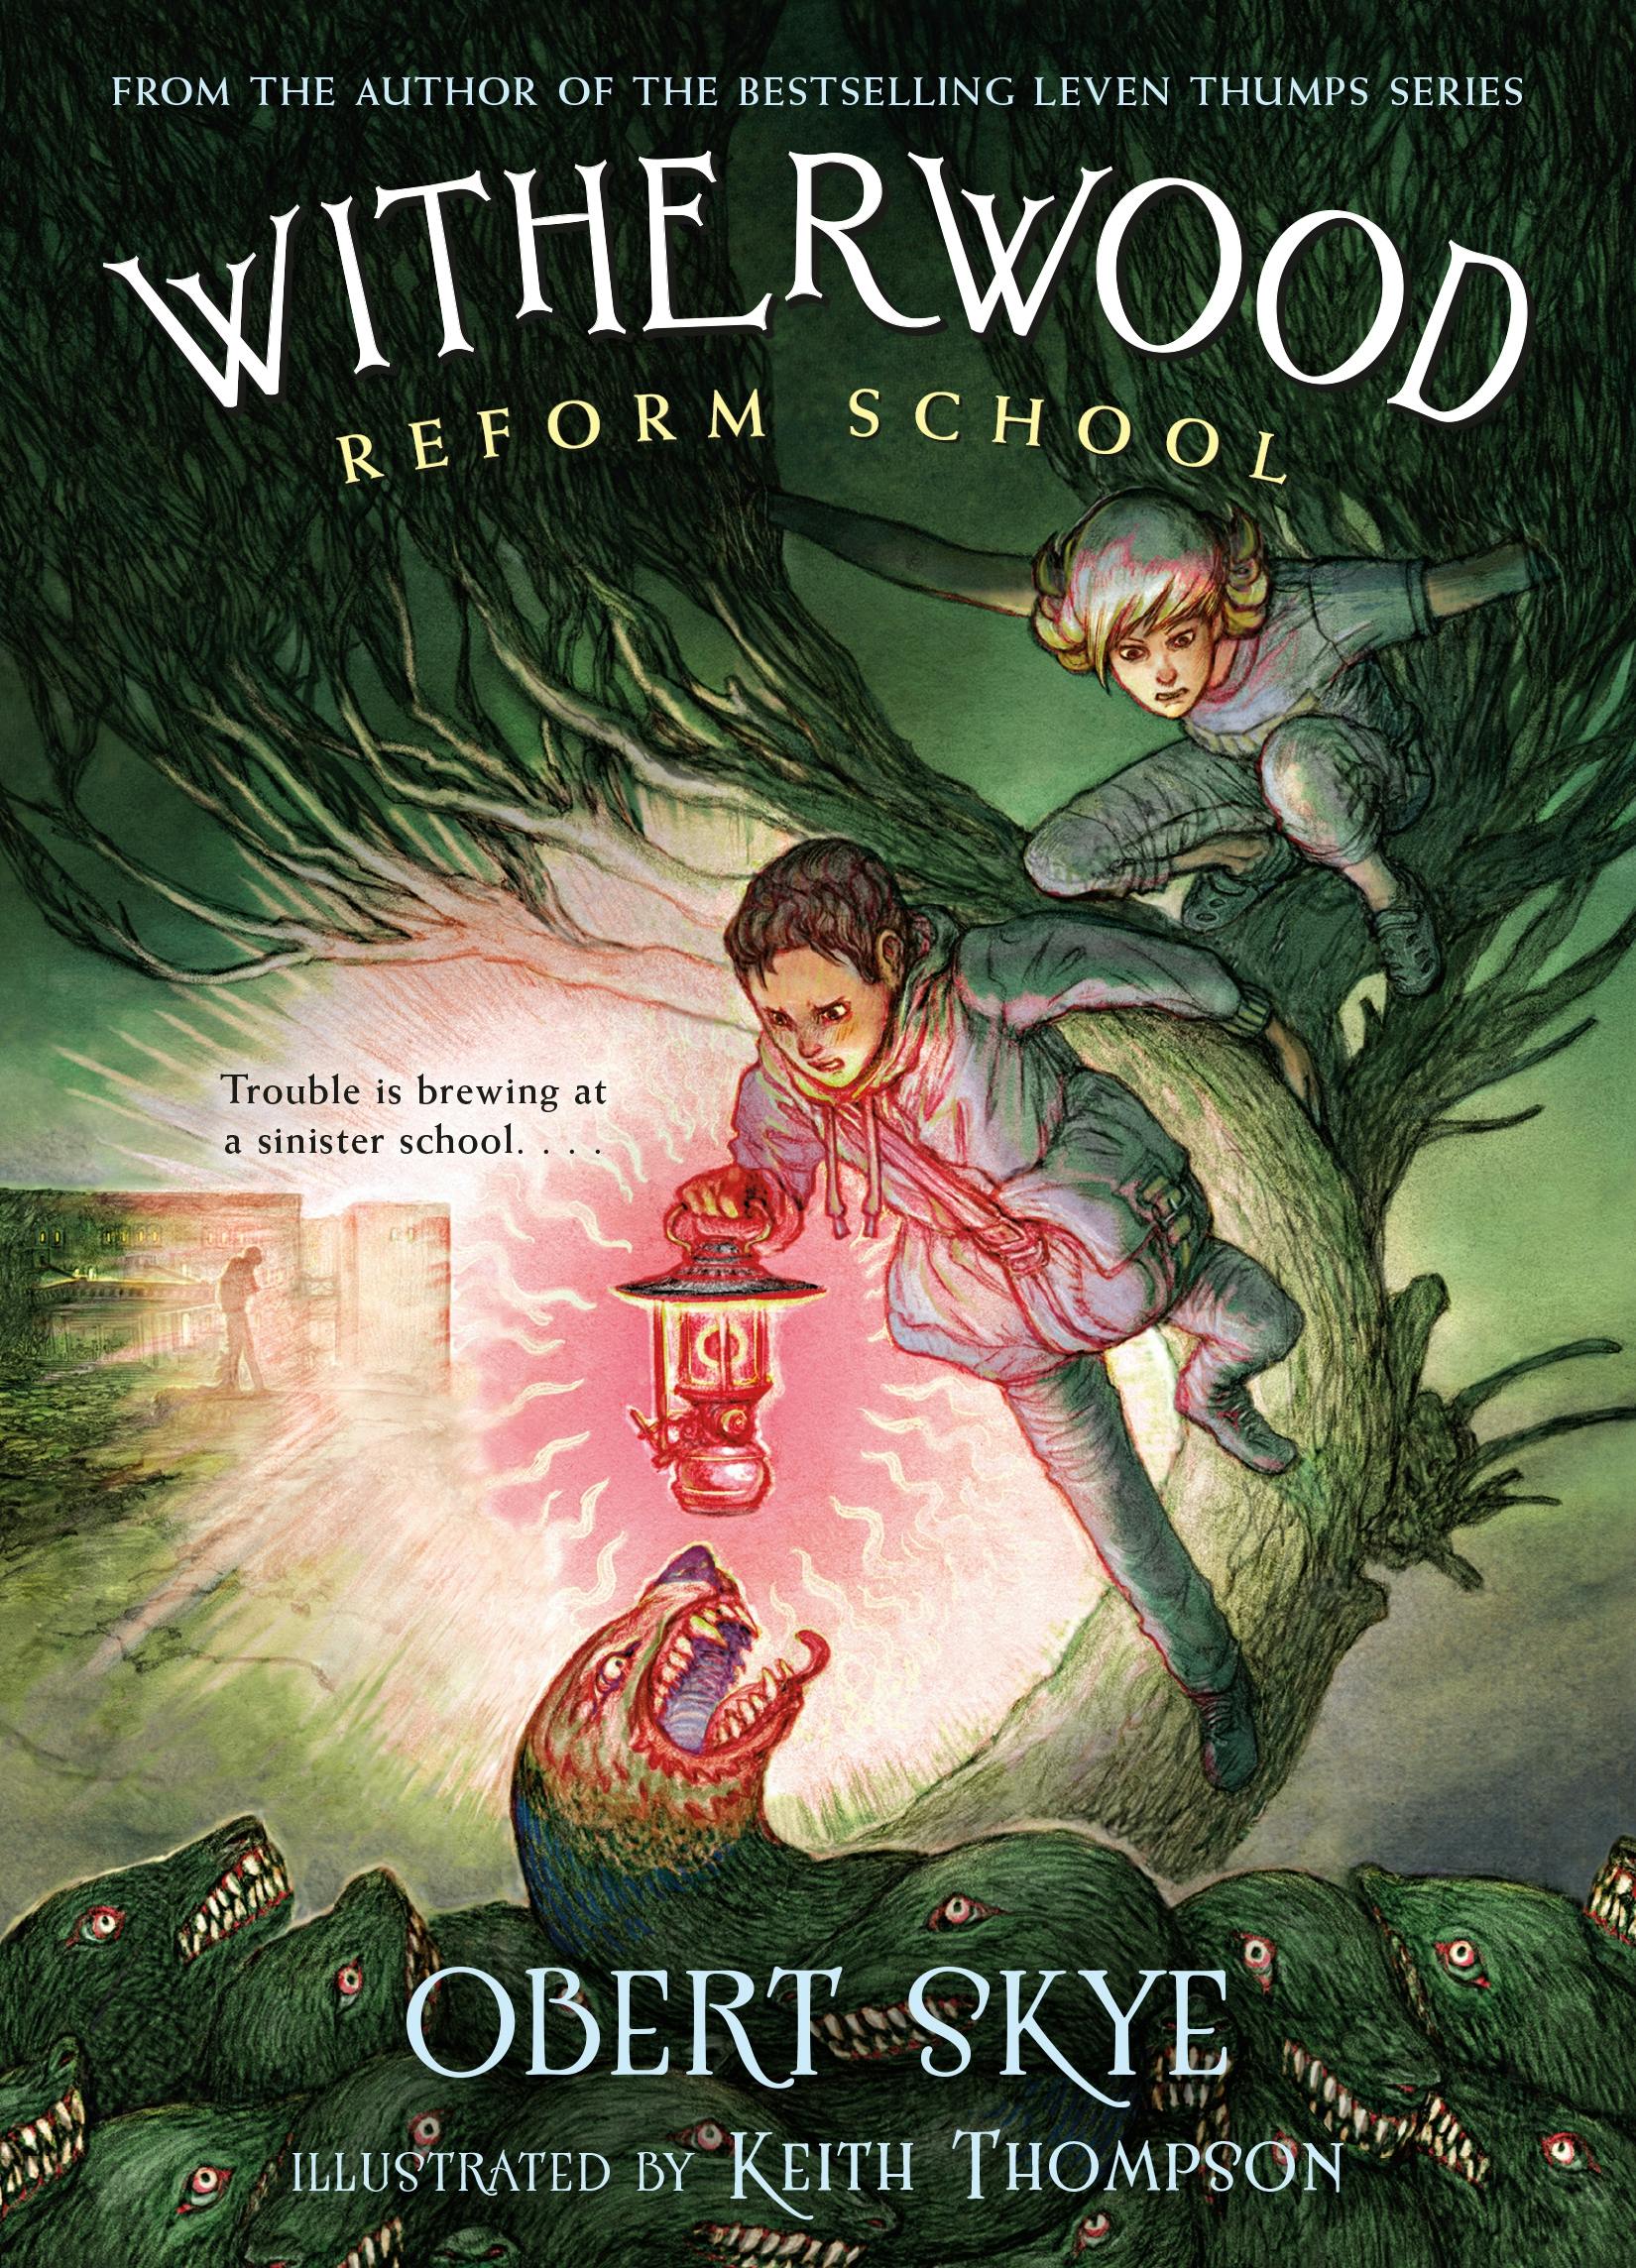 Witherwood Reform School